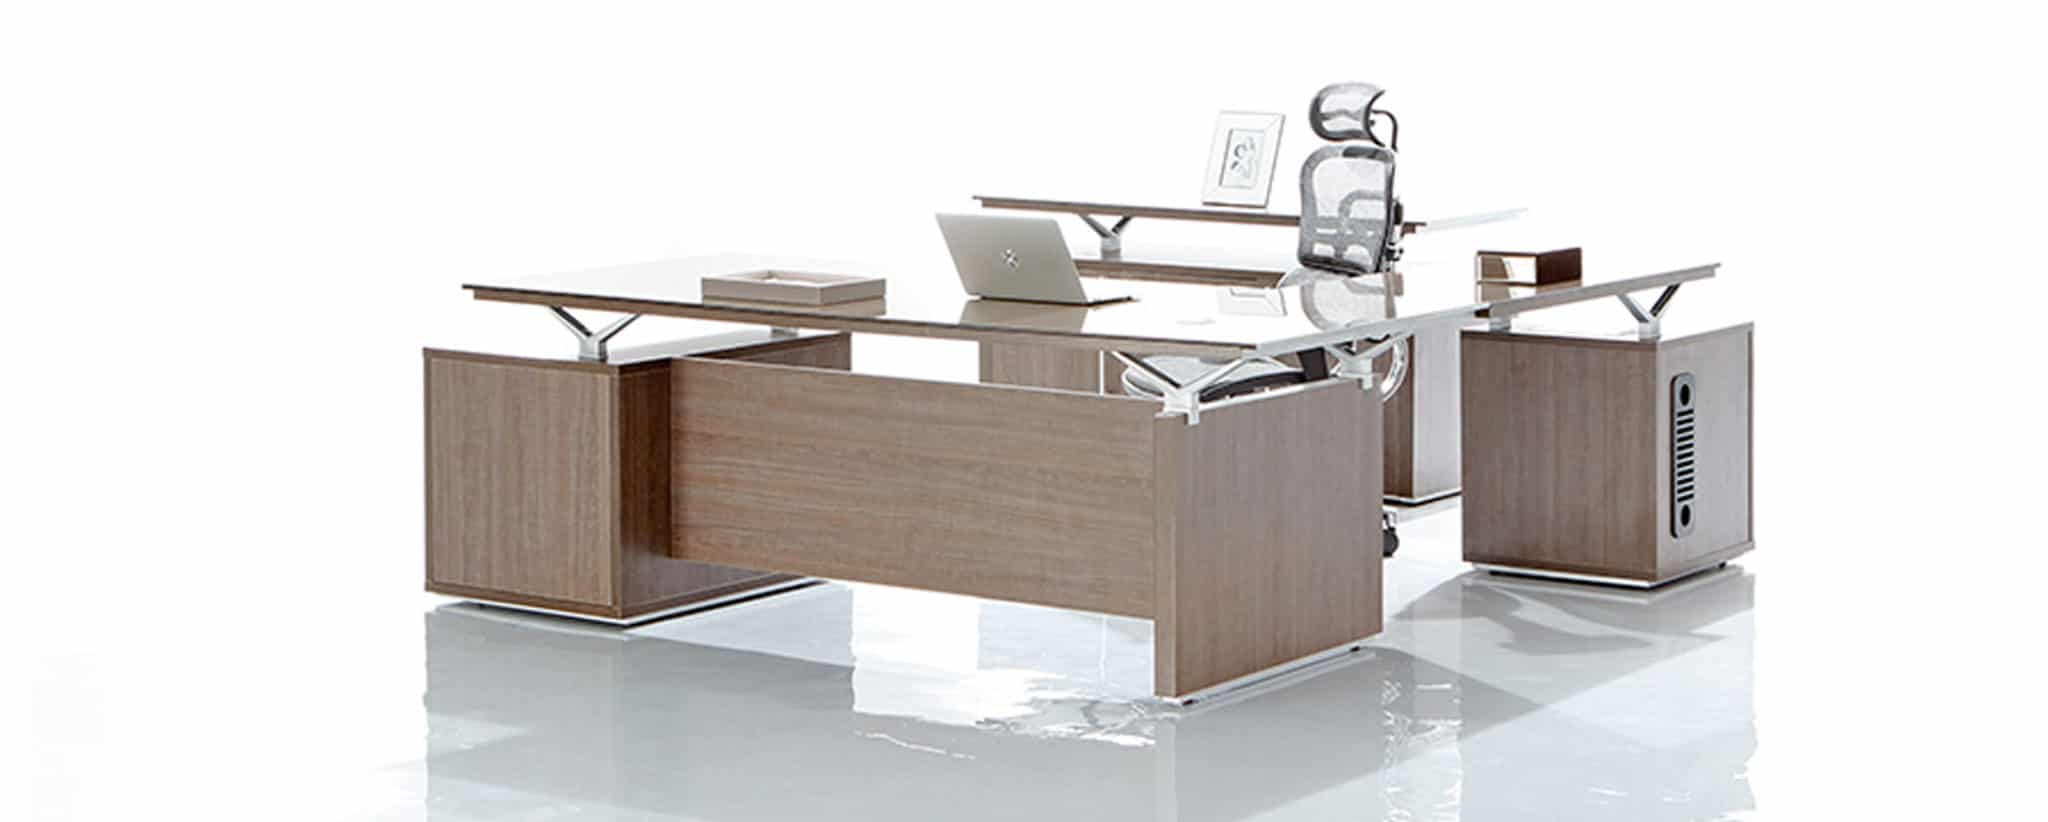 Office mix desks أوفيس مكس مكاتب